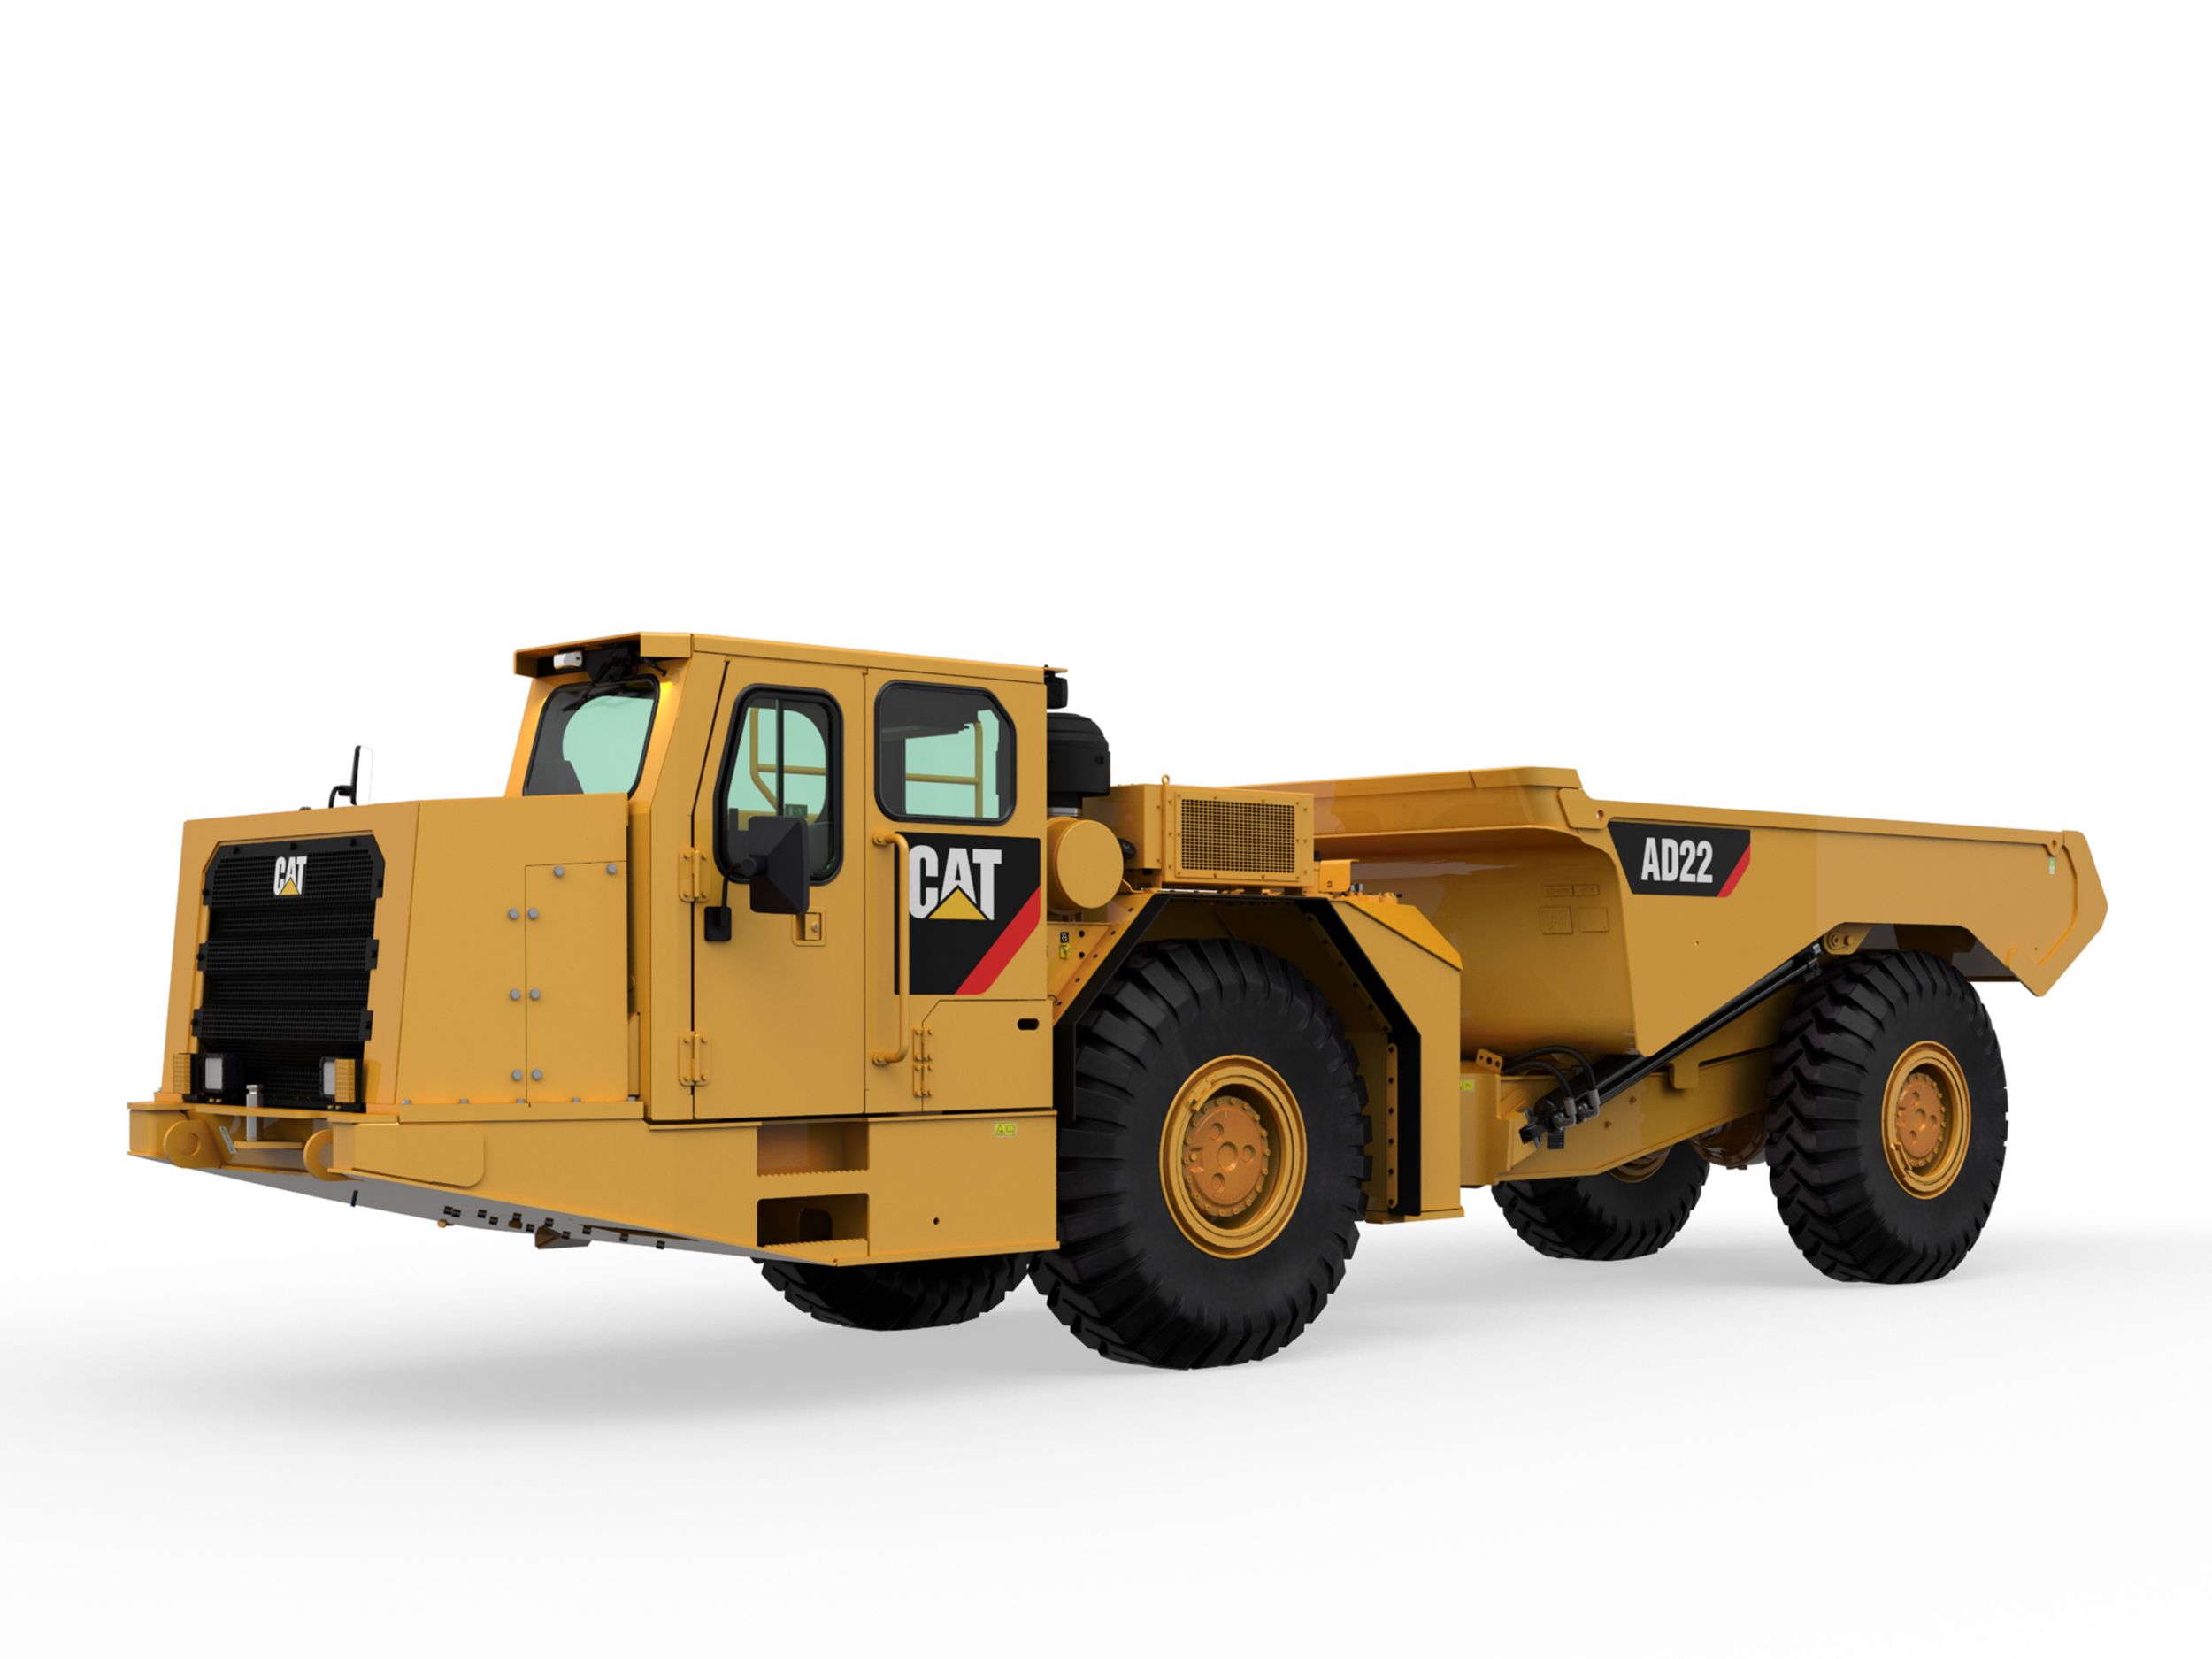 57 Best Images Cat Underground Haul Trucks : Ground Force Worldwide Introduces The New Underground Haul Truck Product Line Built Utilizing 65 Cat Content Mining Com